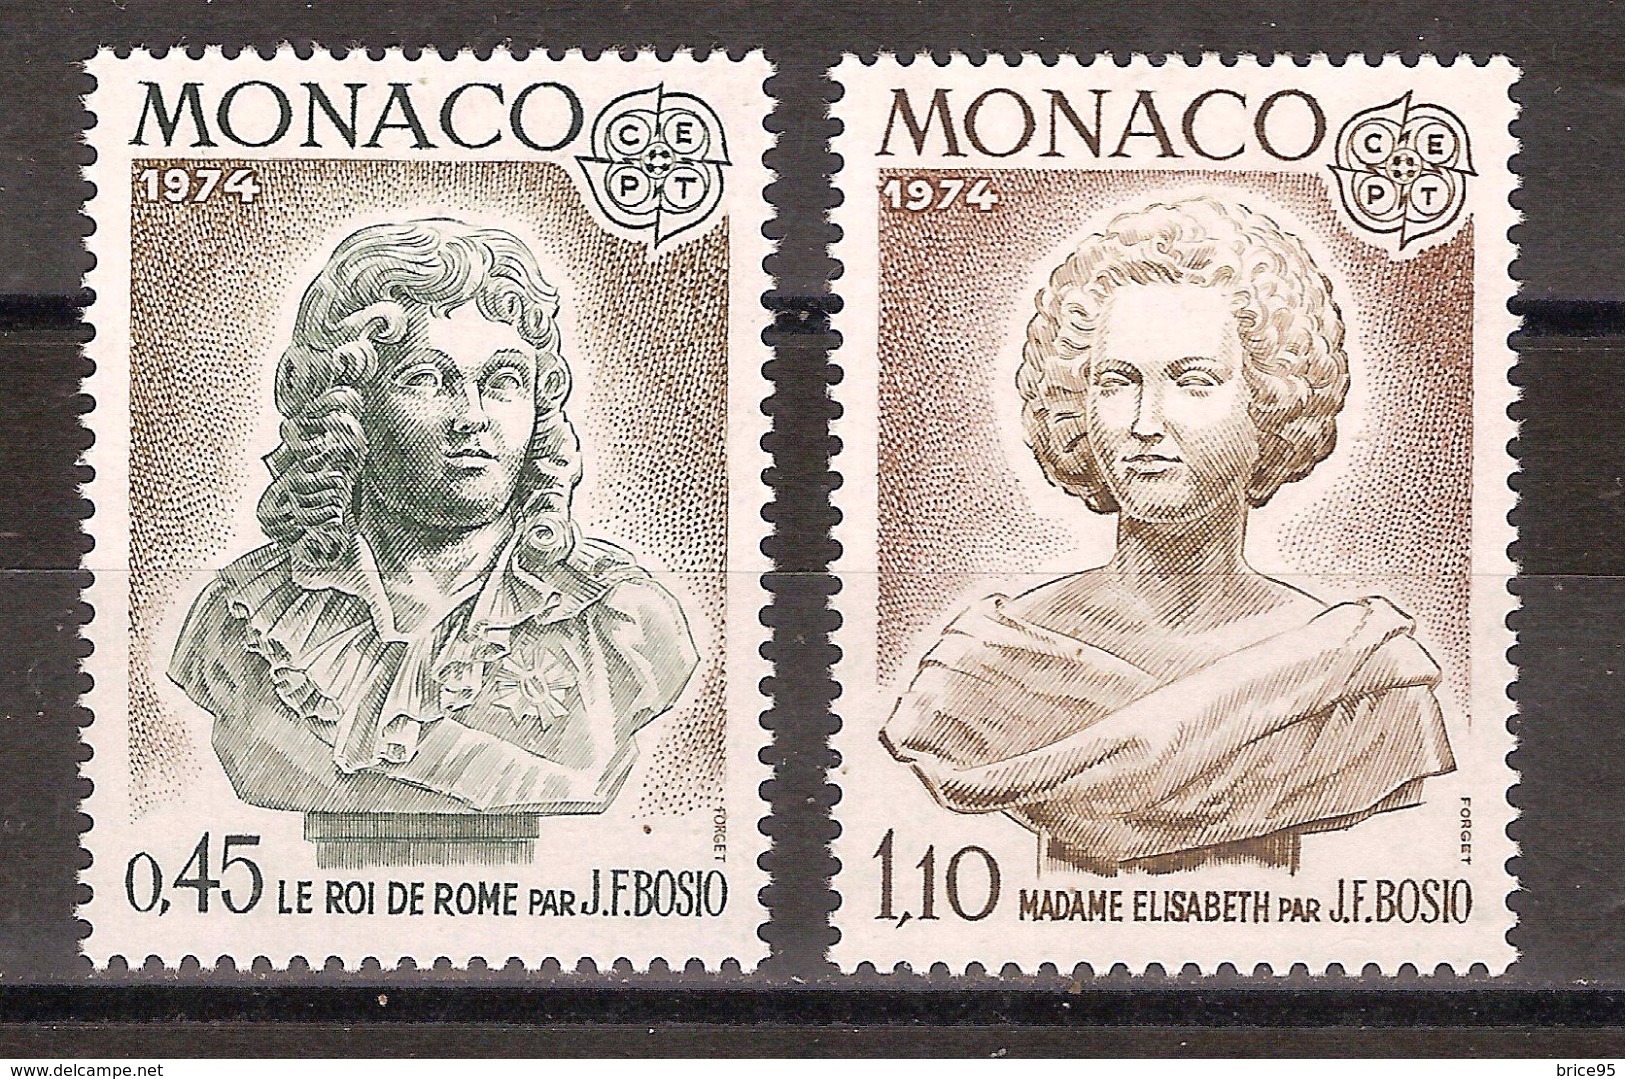 Monaco - Yt N° 957 à 958 - Neuf Sans Charnière - 1974 - Neufs